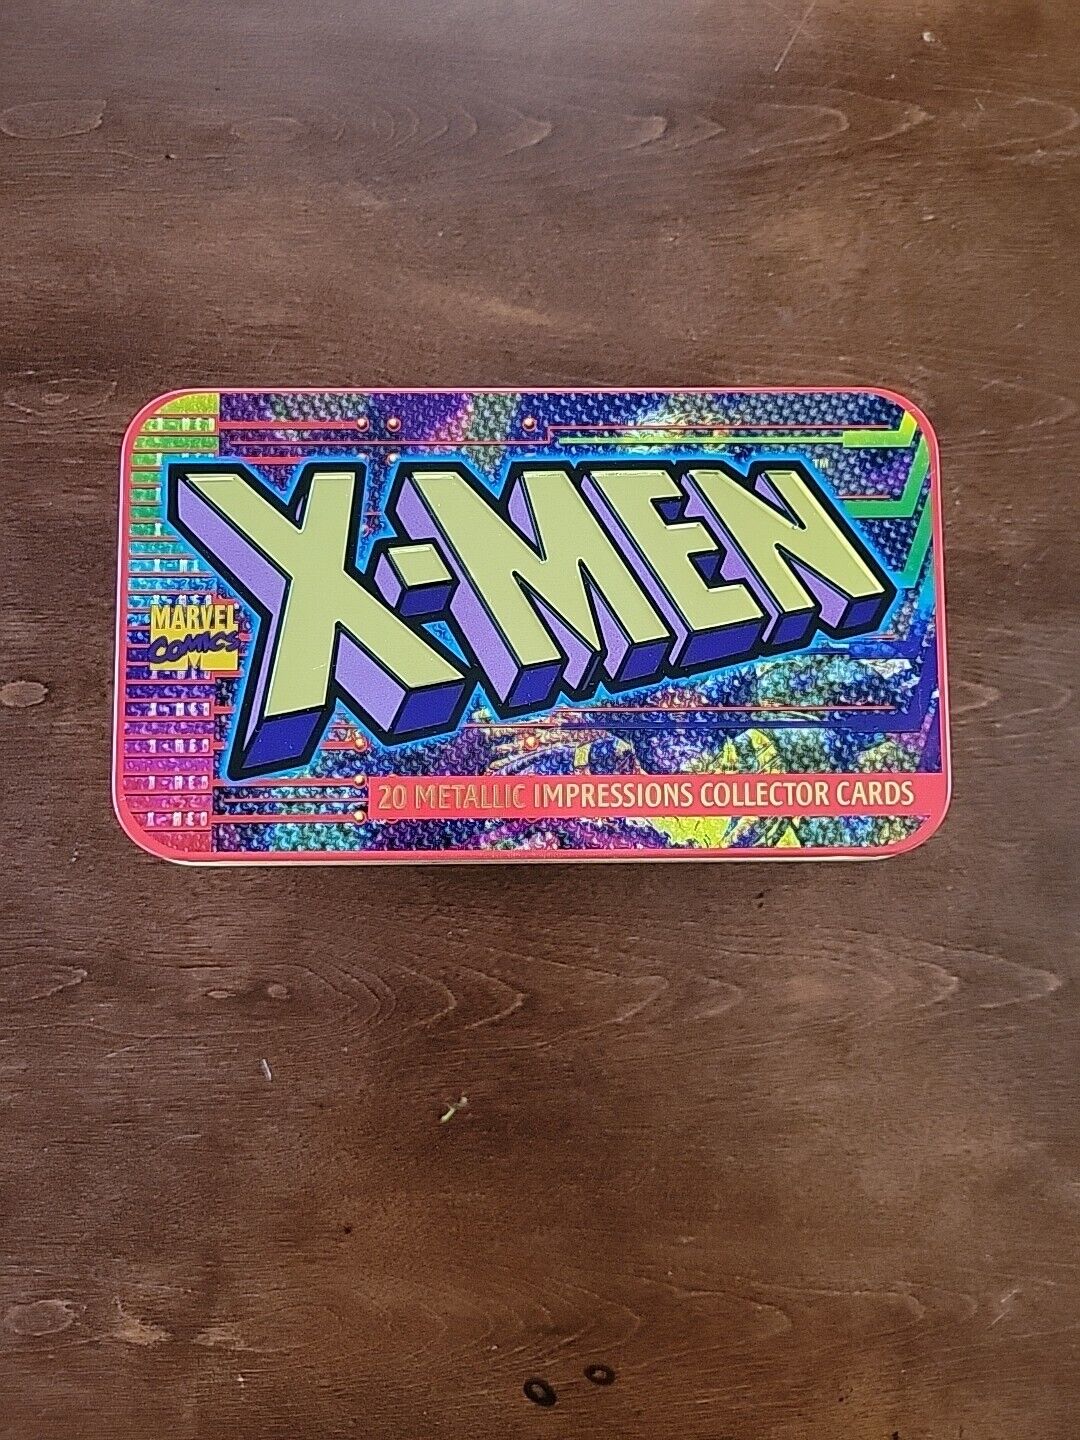 1996 X-men Metallic Impressions Collector Cards